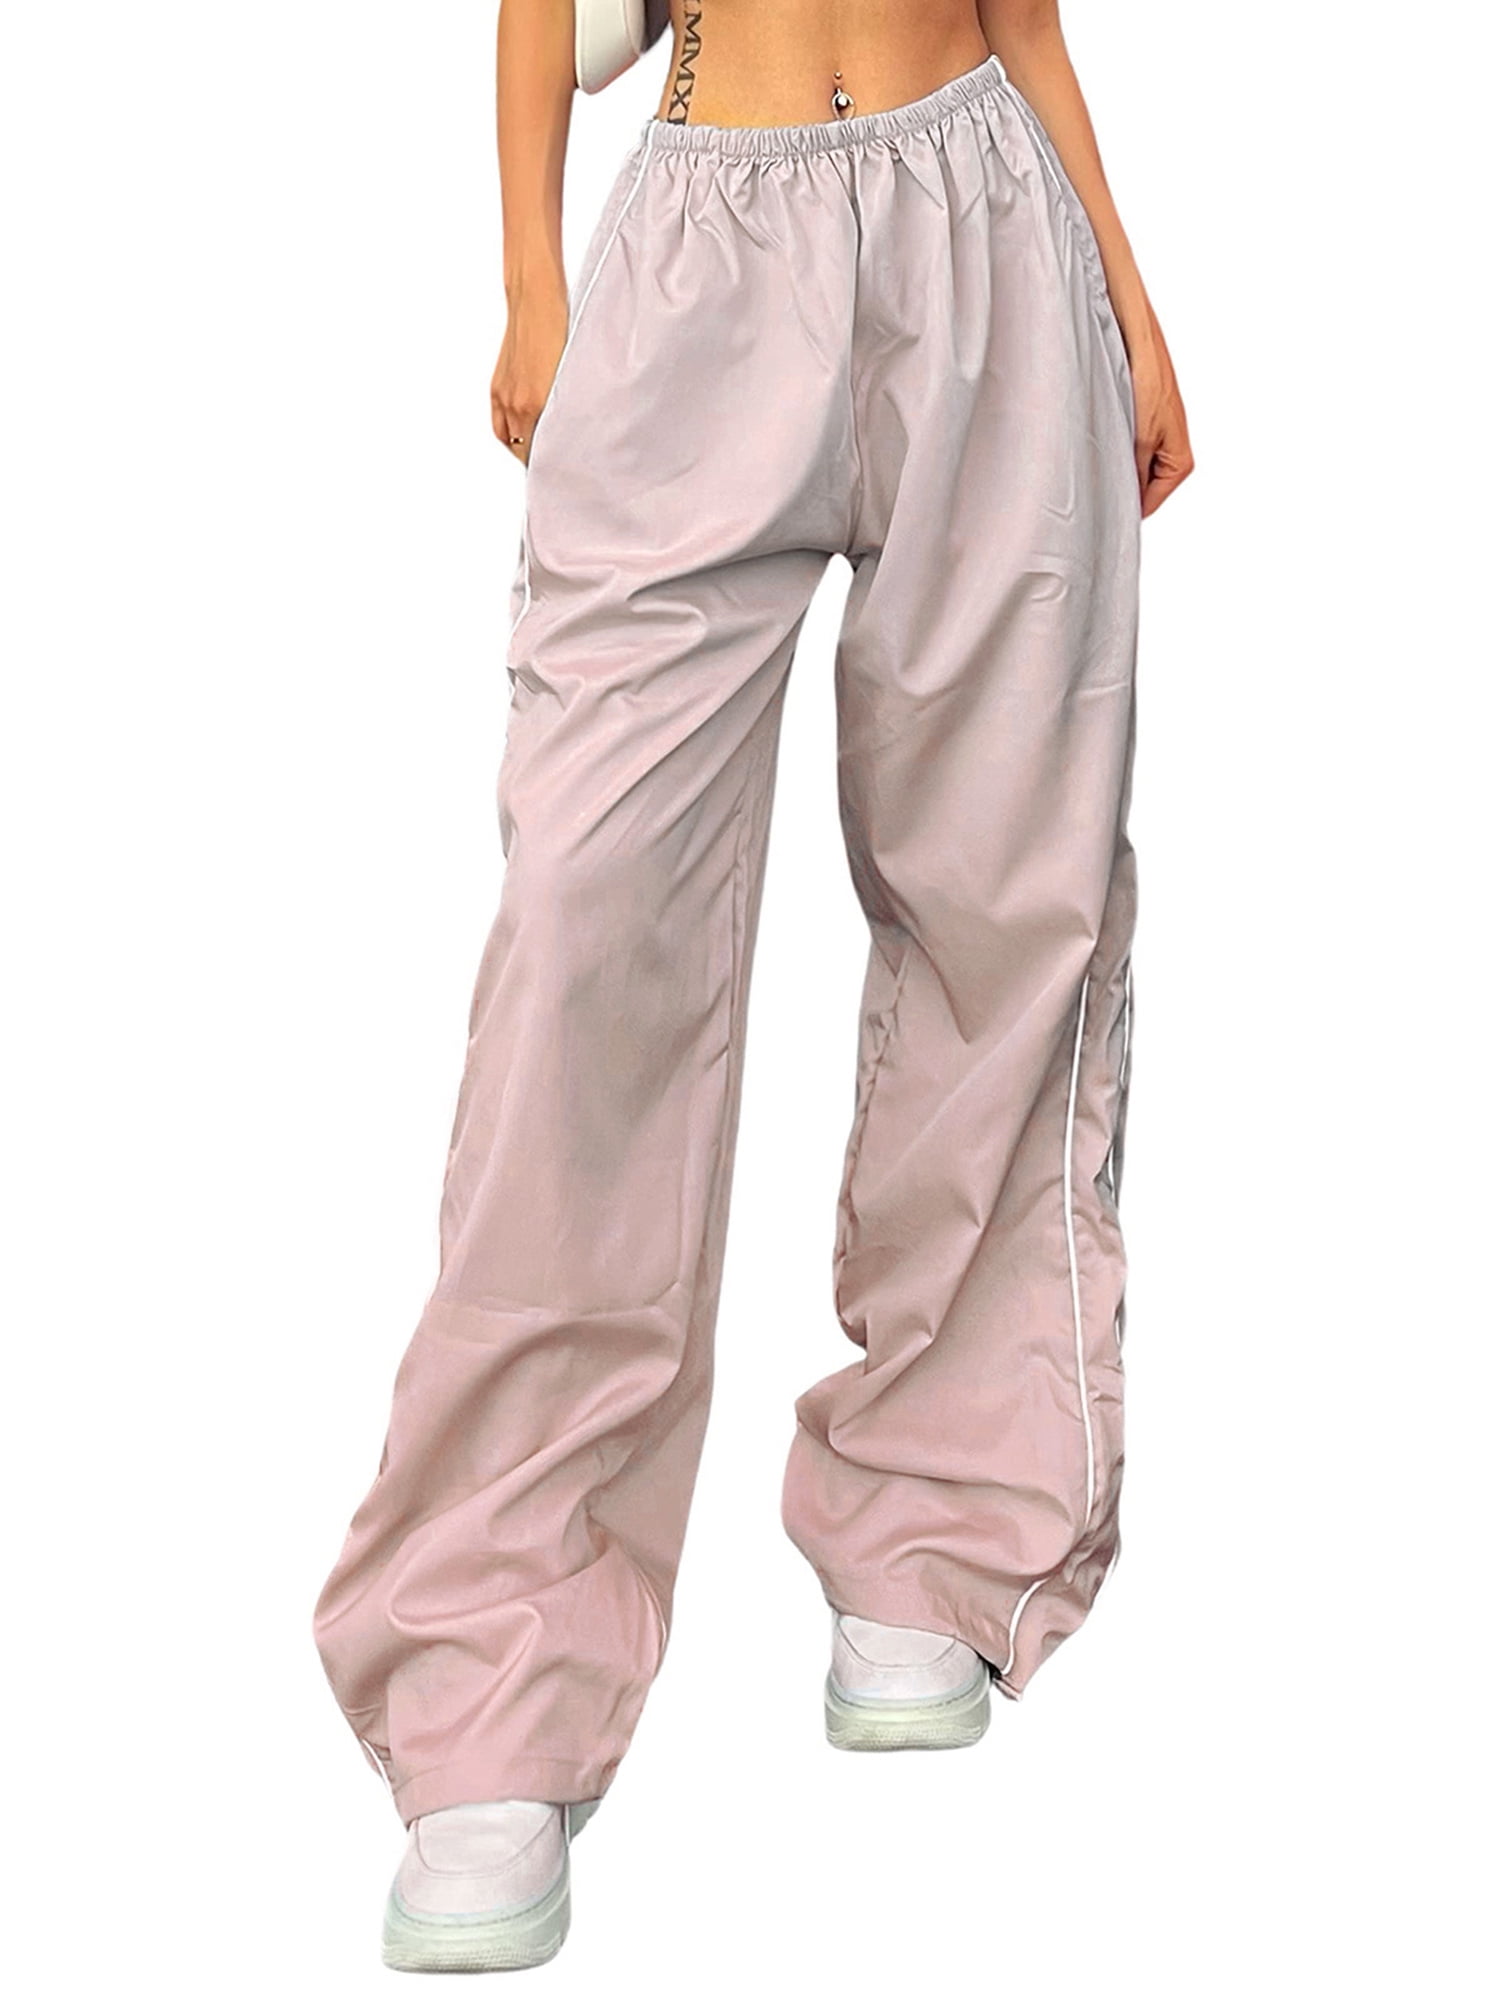 NHCDFA Parachute Pants for Women, Cargo Pants Women, Baggy Y3K Low